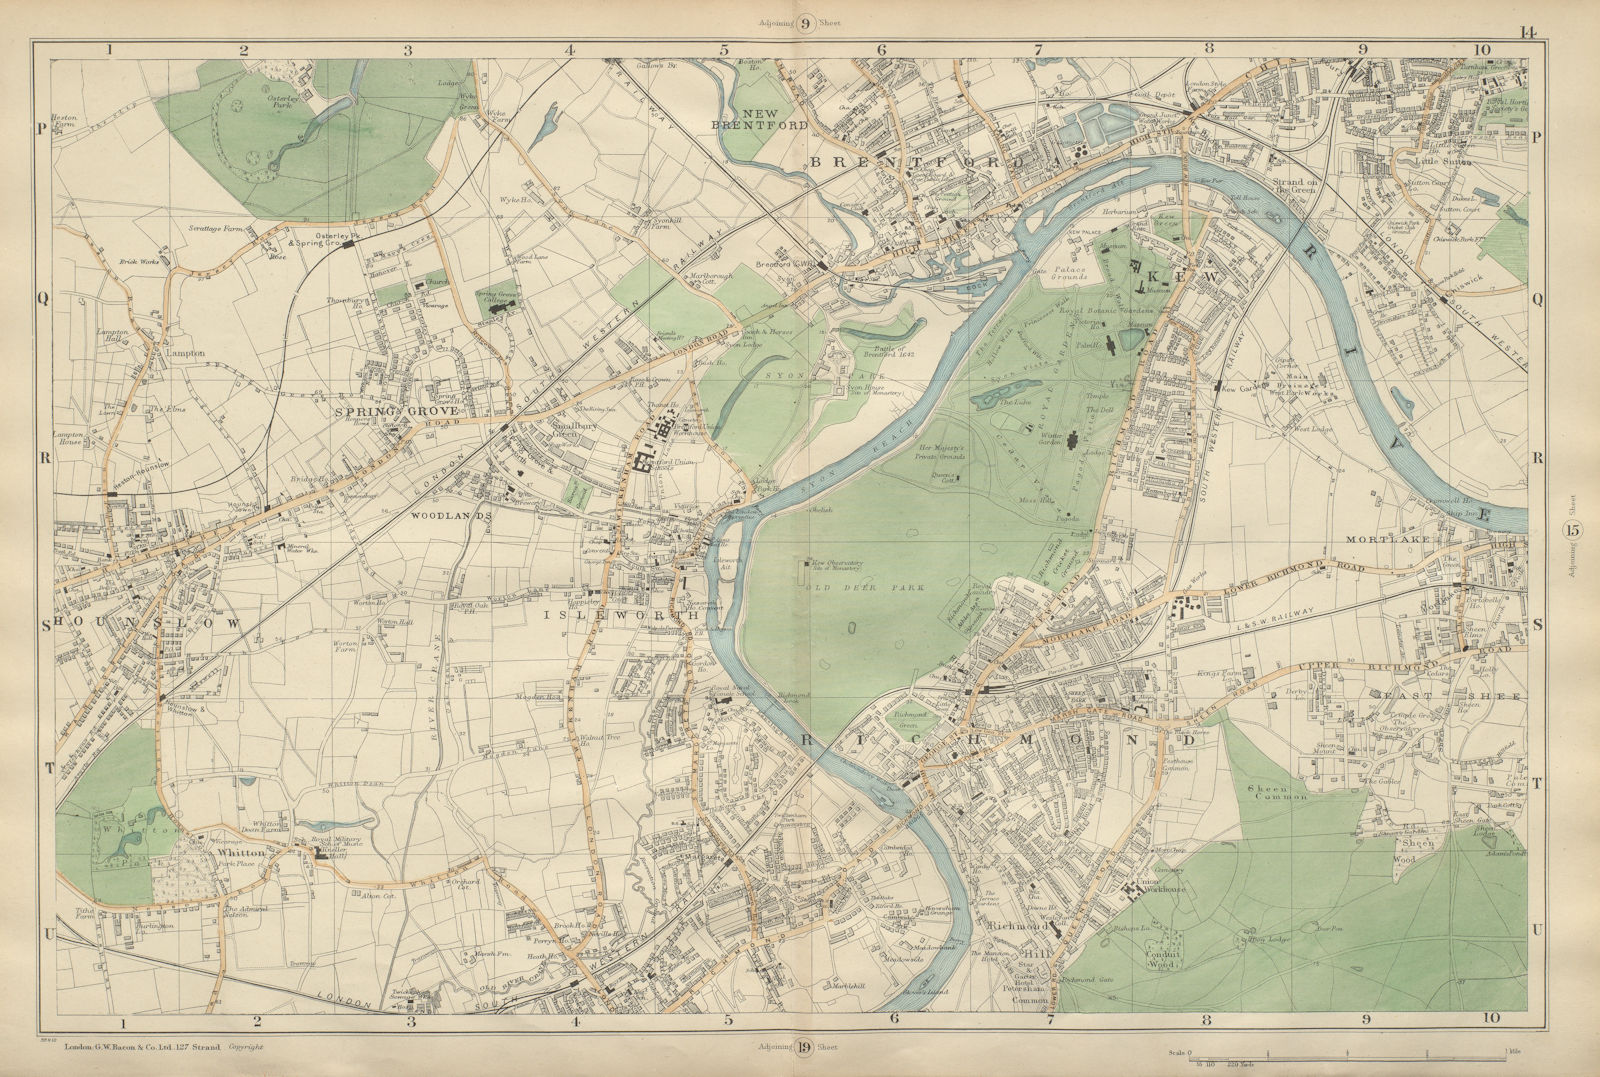 RICHMOND/HOUNSLOW Kew Isleworth Brentford Spring Grove Mortlake BACON 1900 map